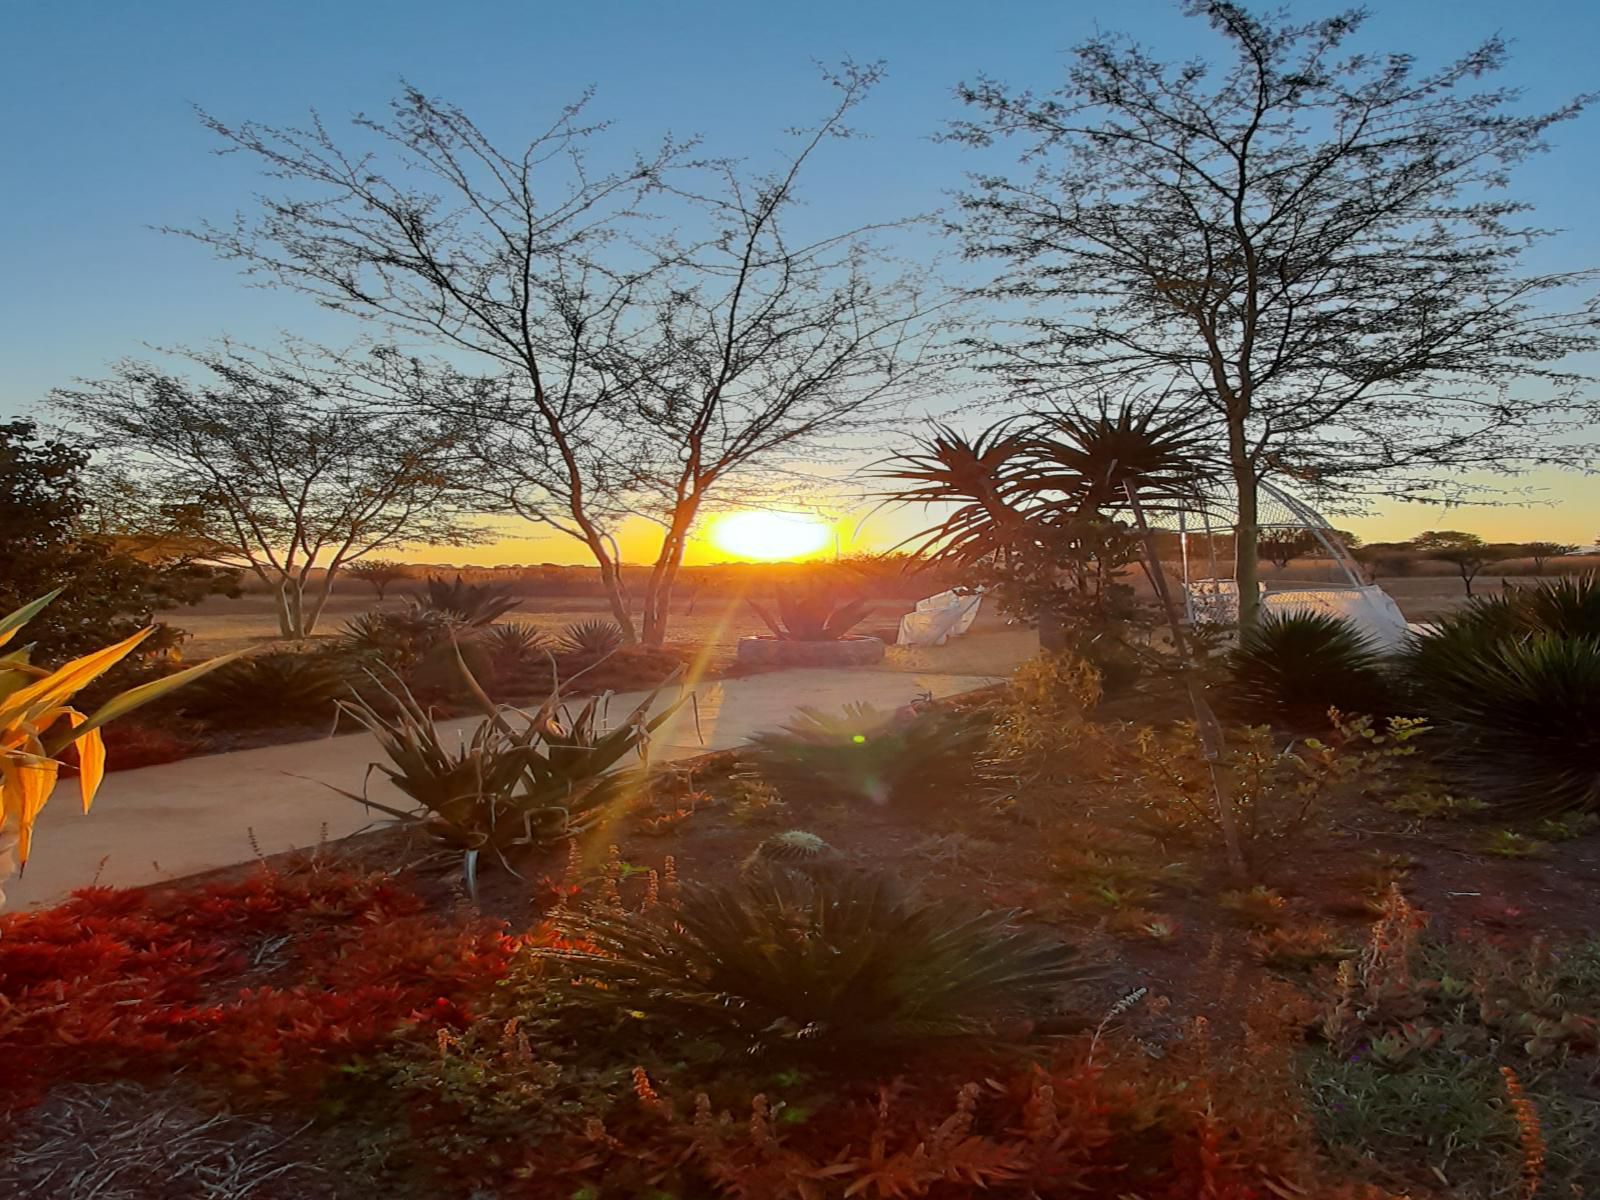 Gallery Inn Bela Bela Warmbaths Limpopo Province South Africa Palm Tree, Plant, Nature, Wood, Sky, Sunset